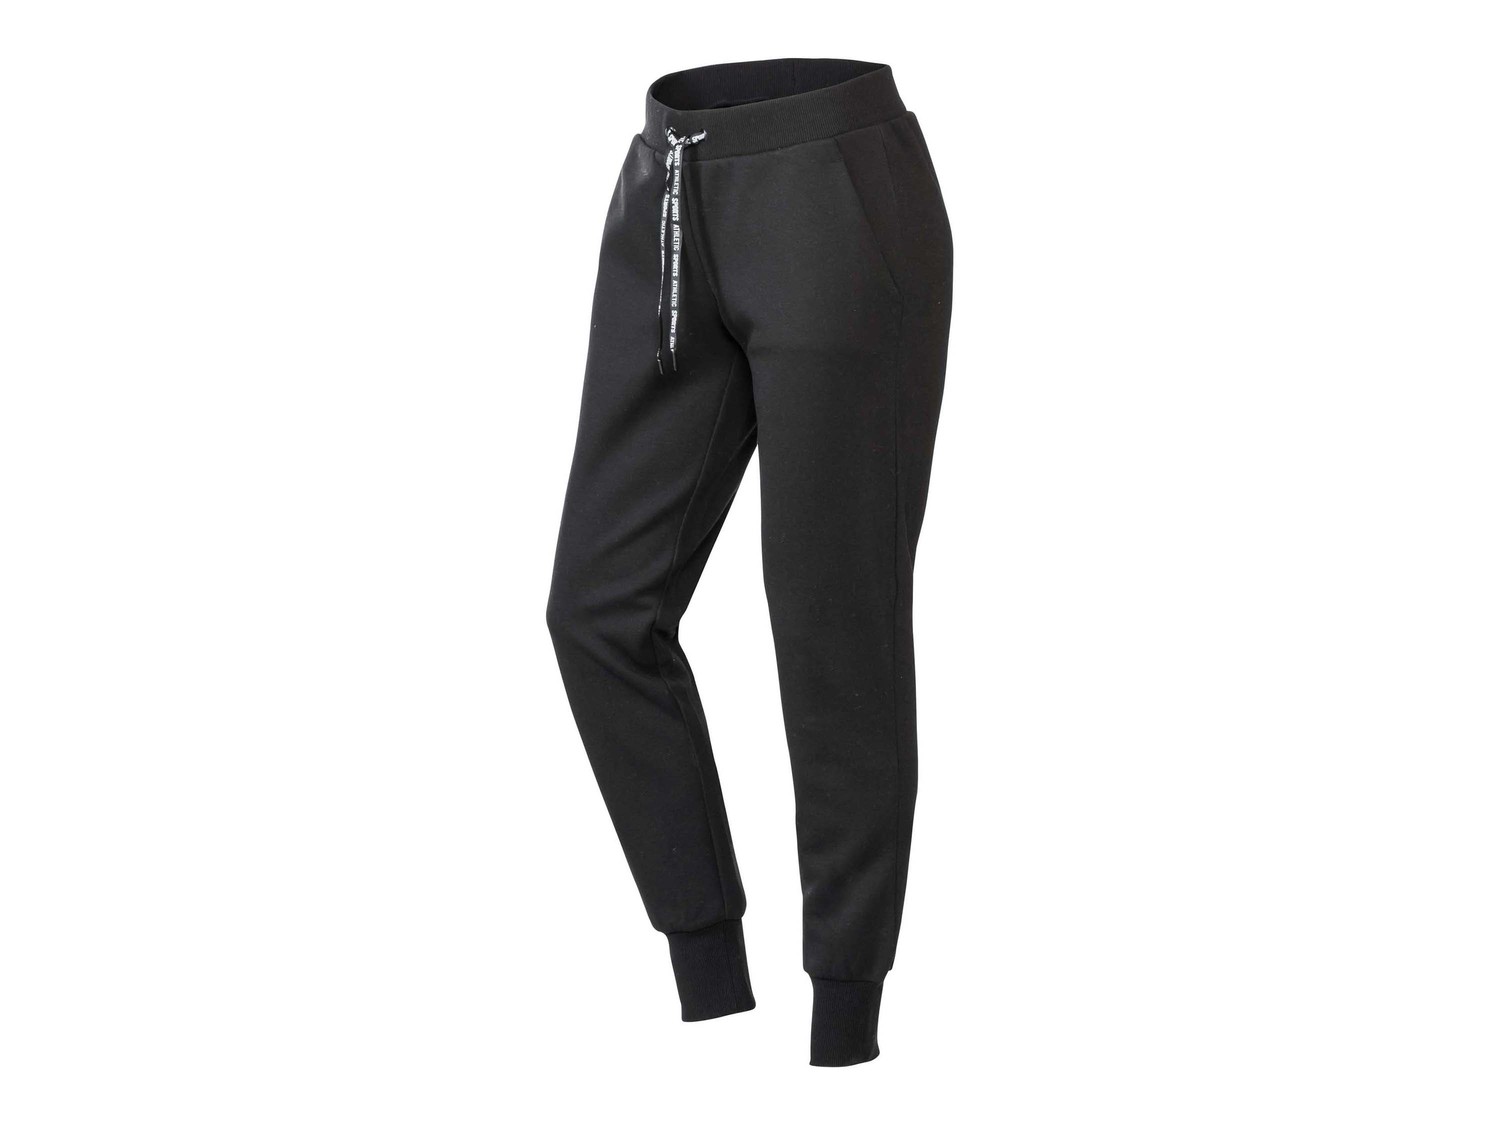 Pantaloni sportivi da donna Crivit, prezzo 9.99 &#8364;  
Misure: XS-L
- Oeko tex NEW